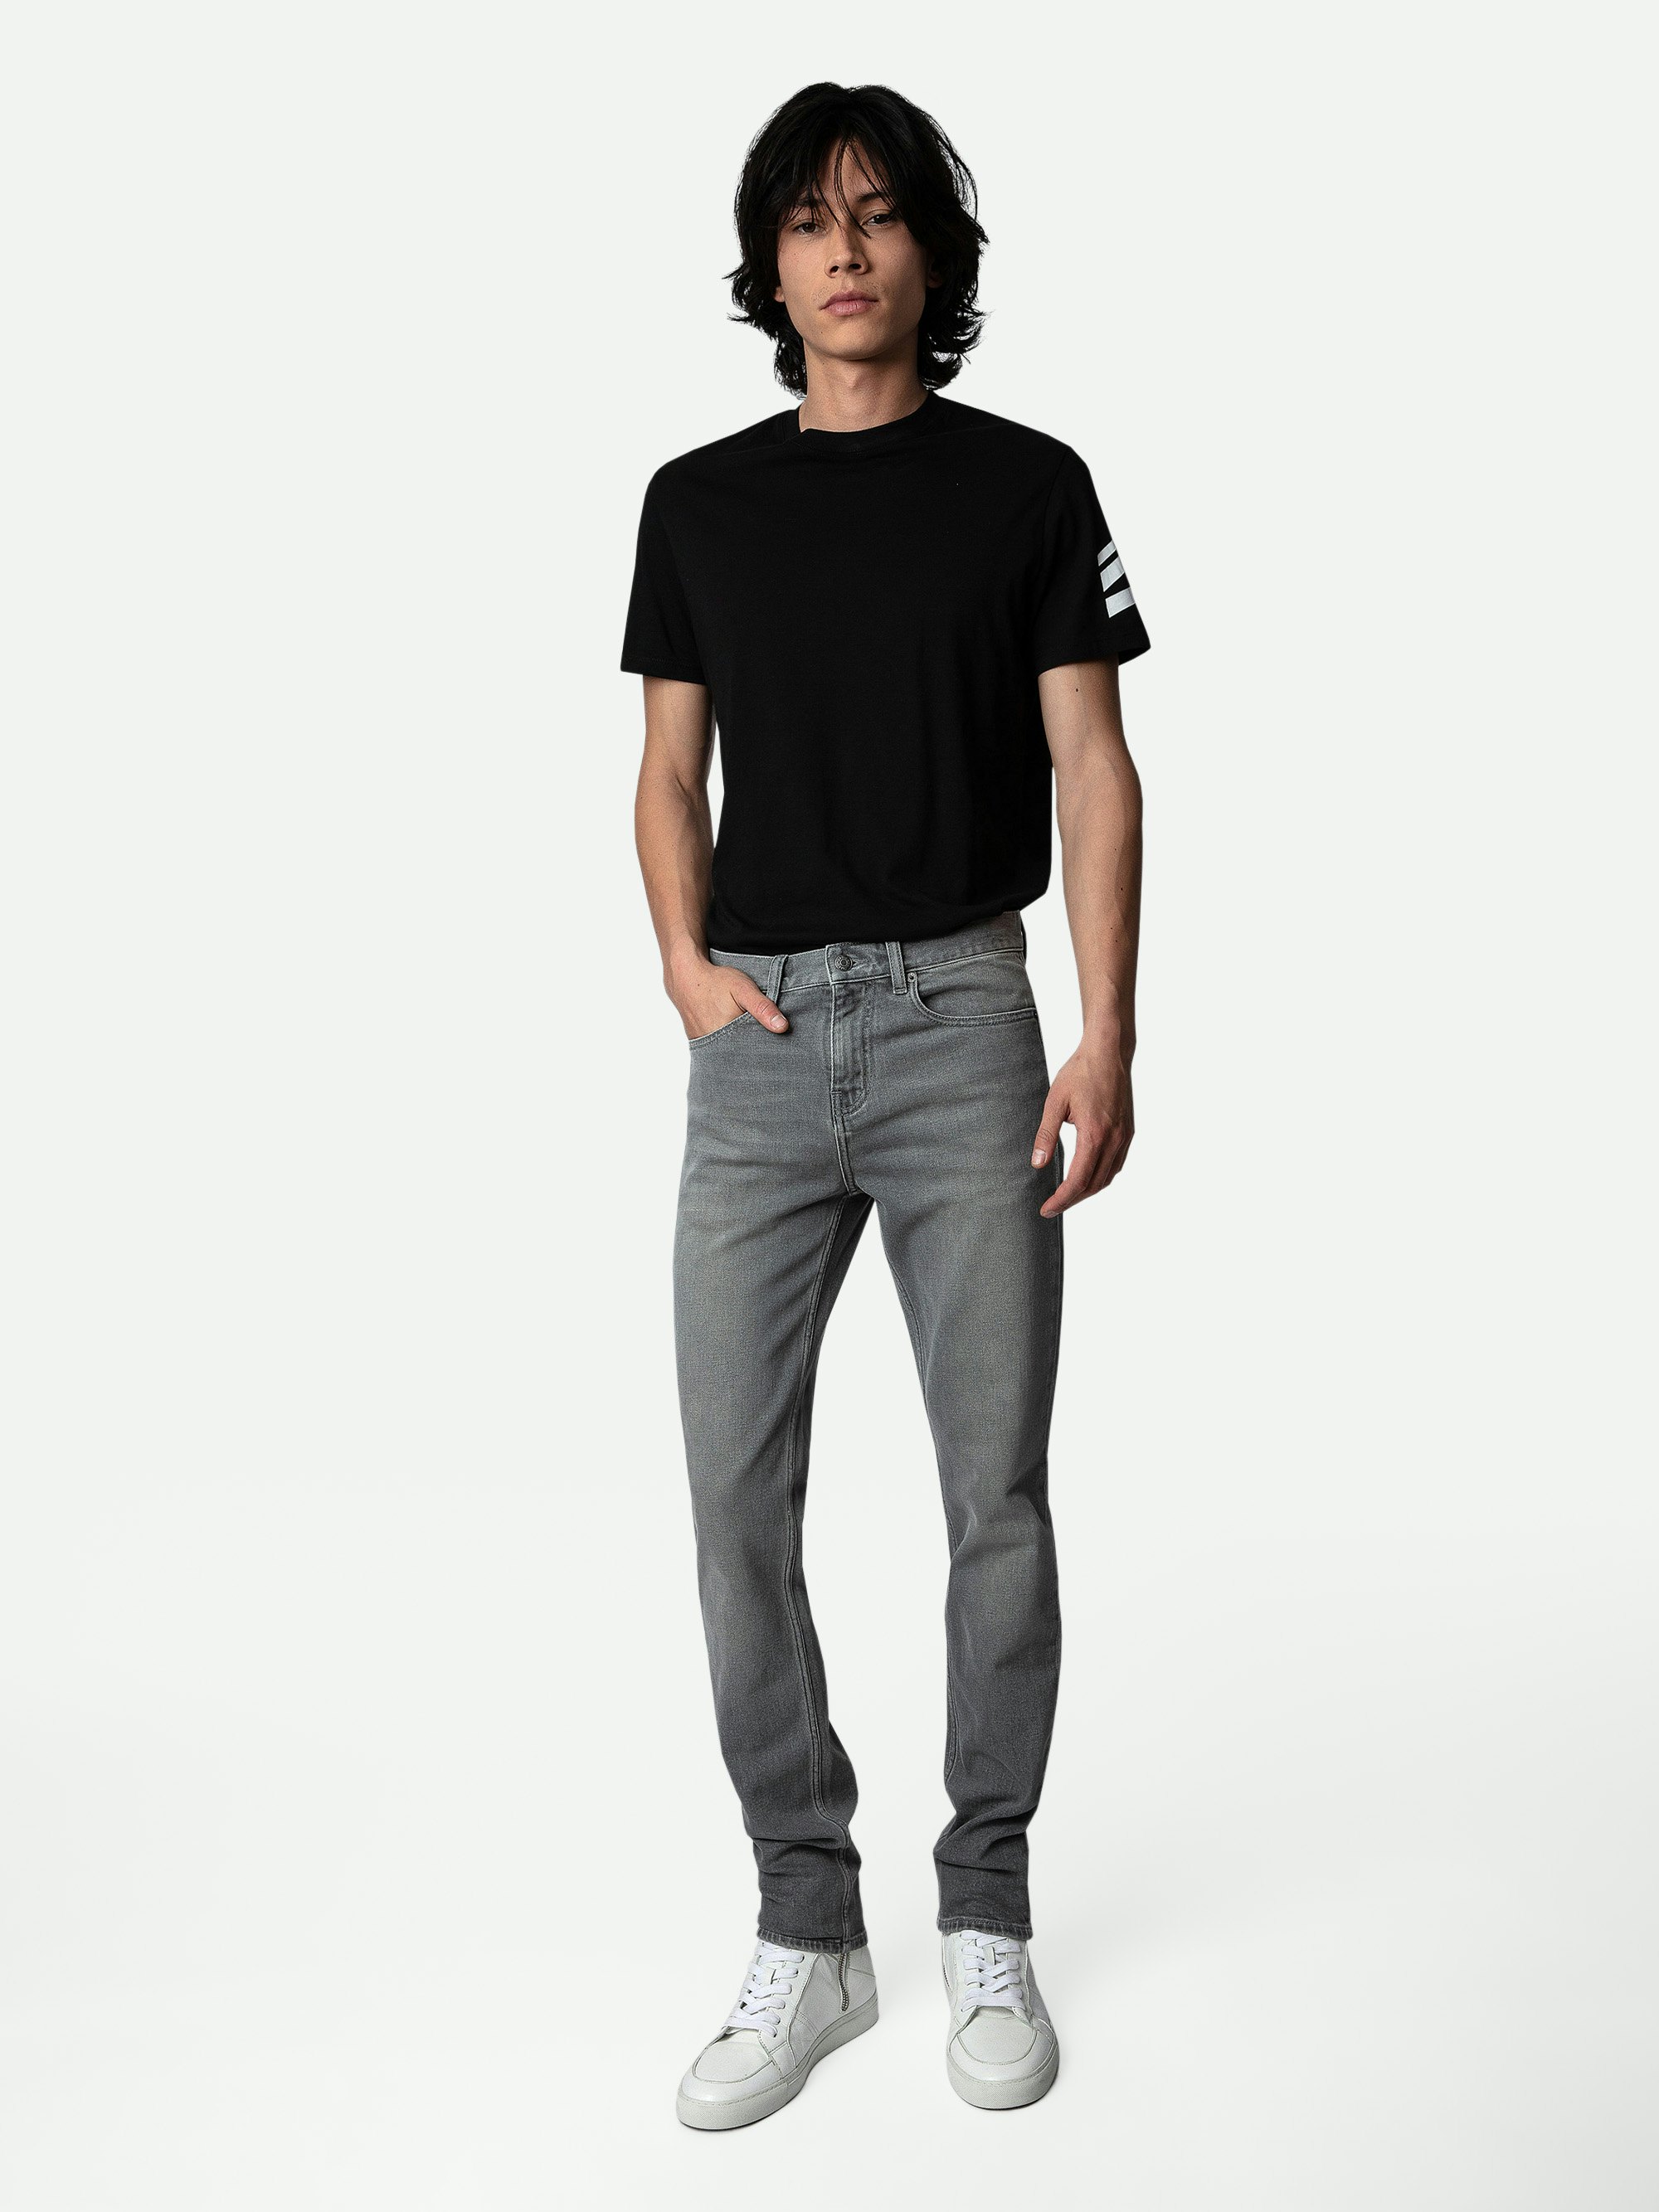 Steeve Jeans  - Men’s regular-fit grey denim jeans.